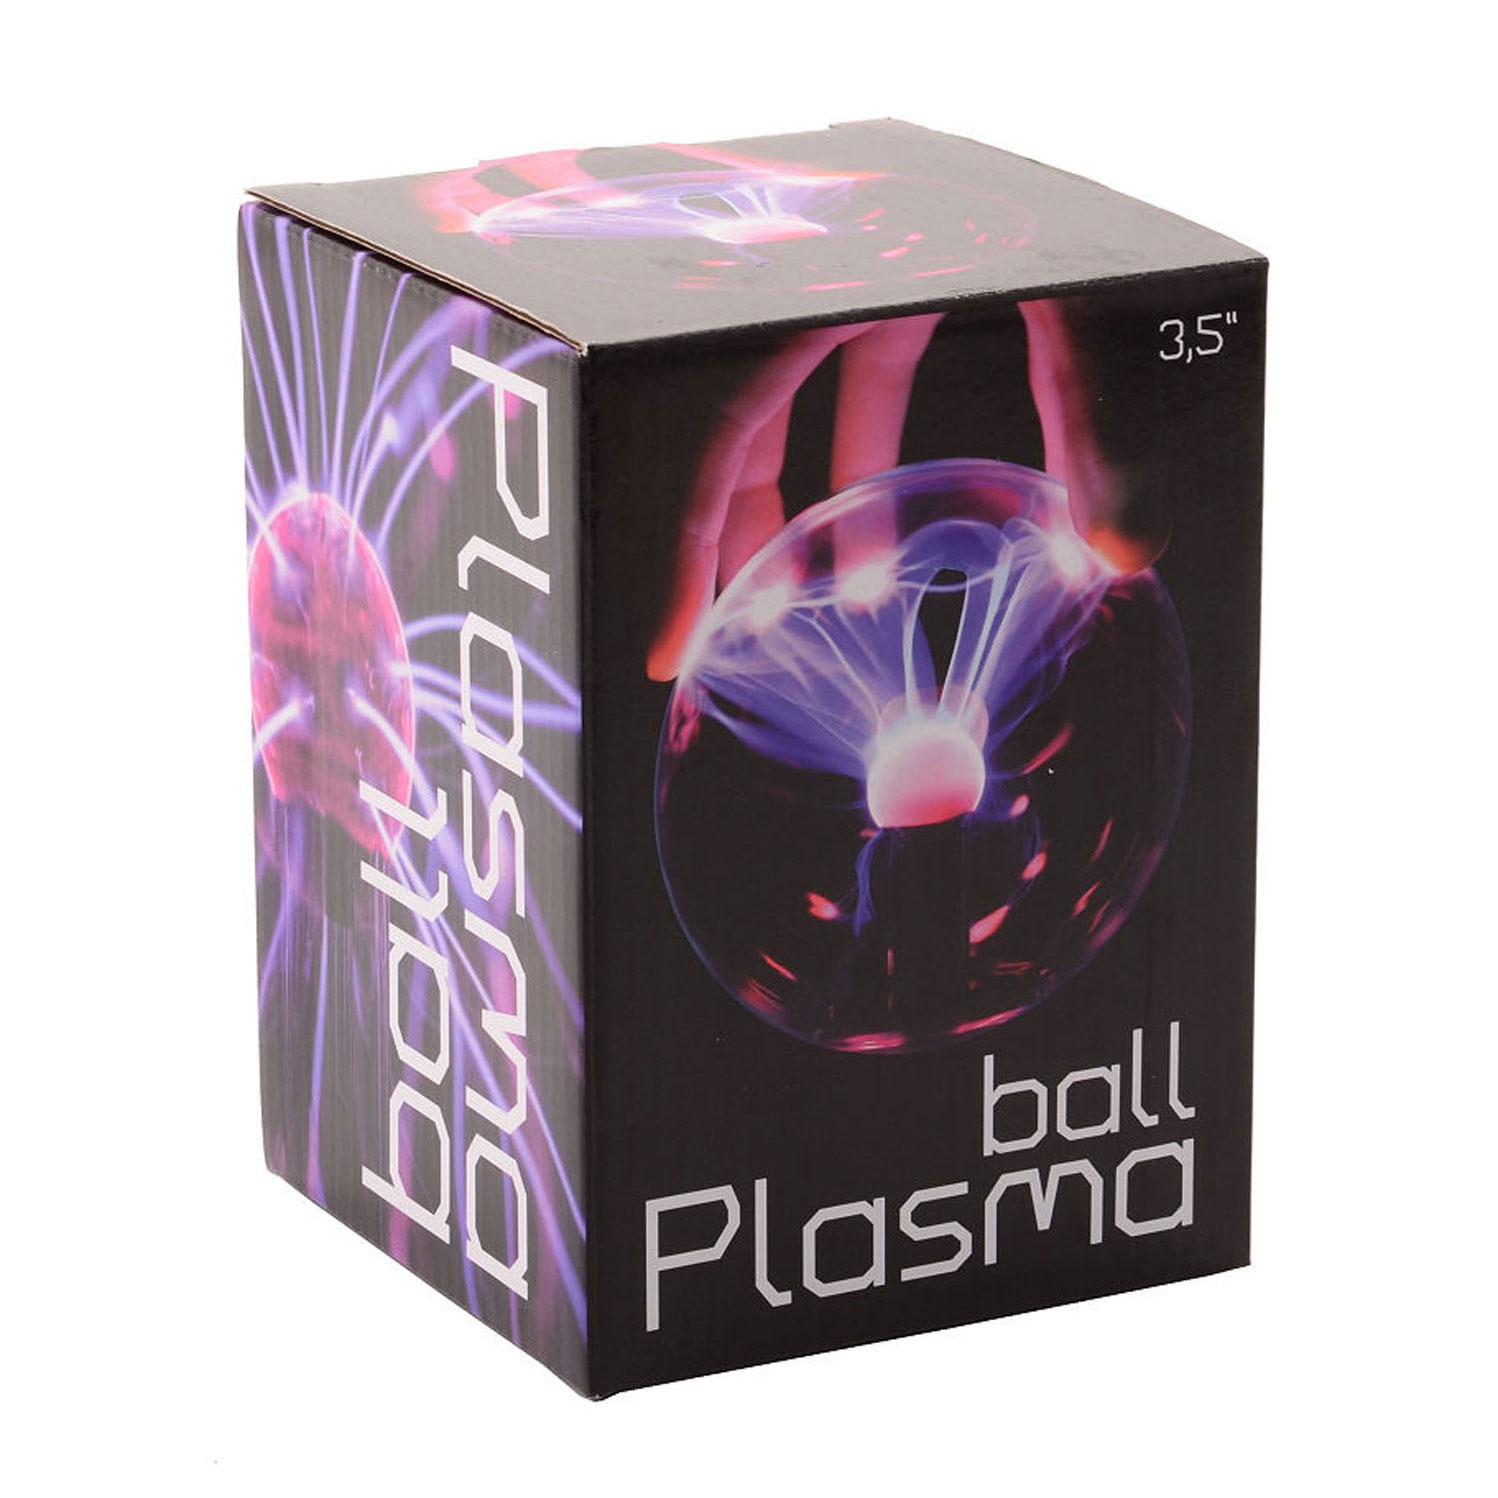 Plasmaball